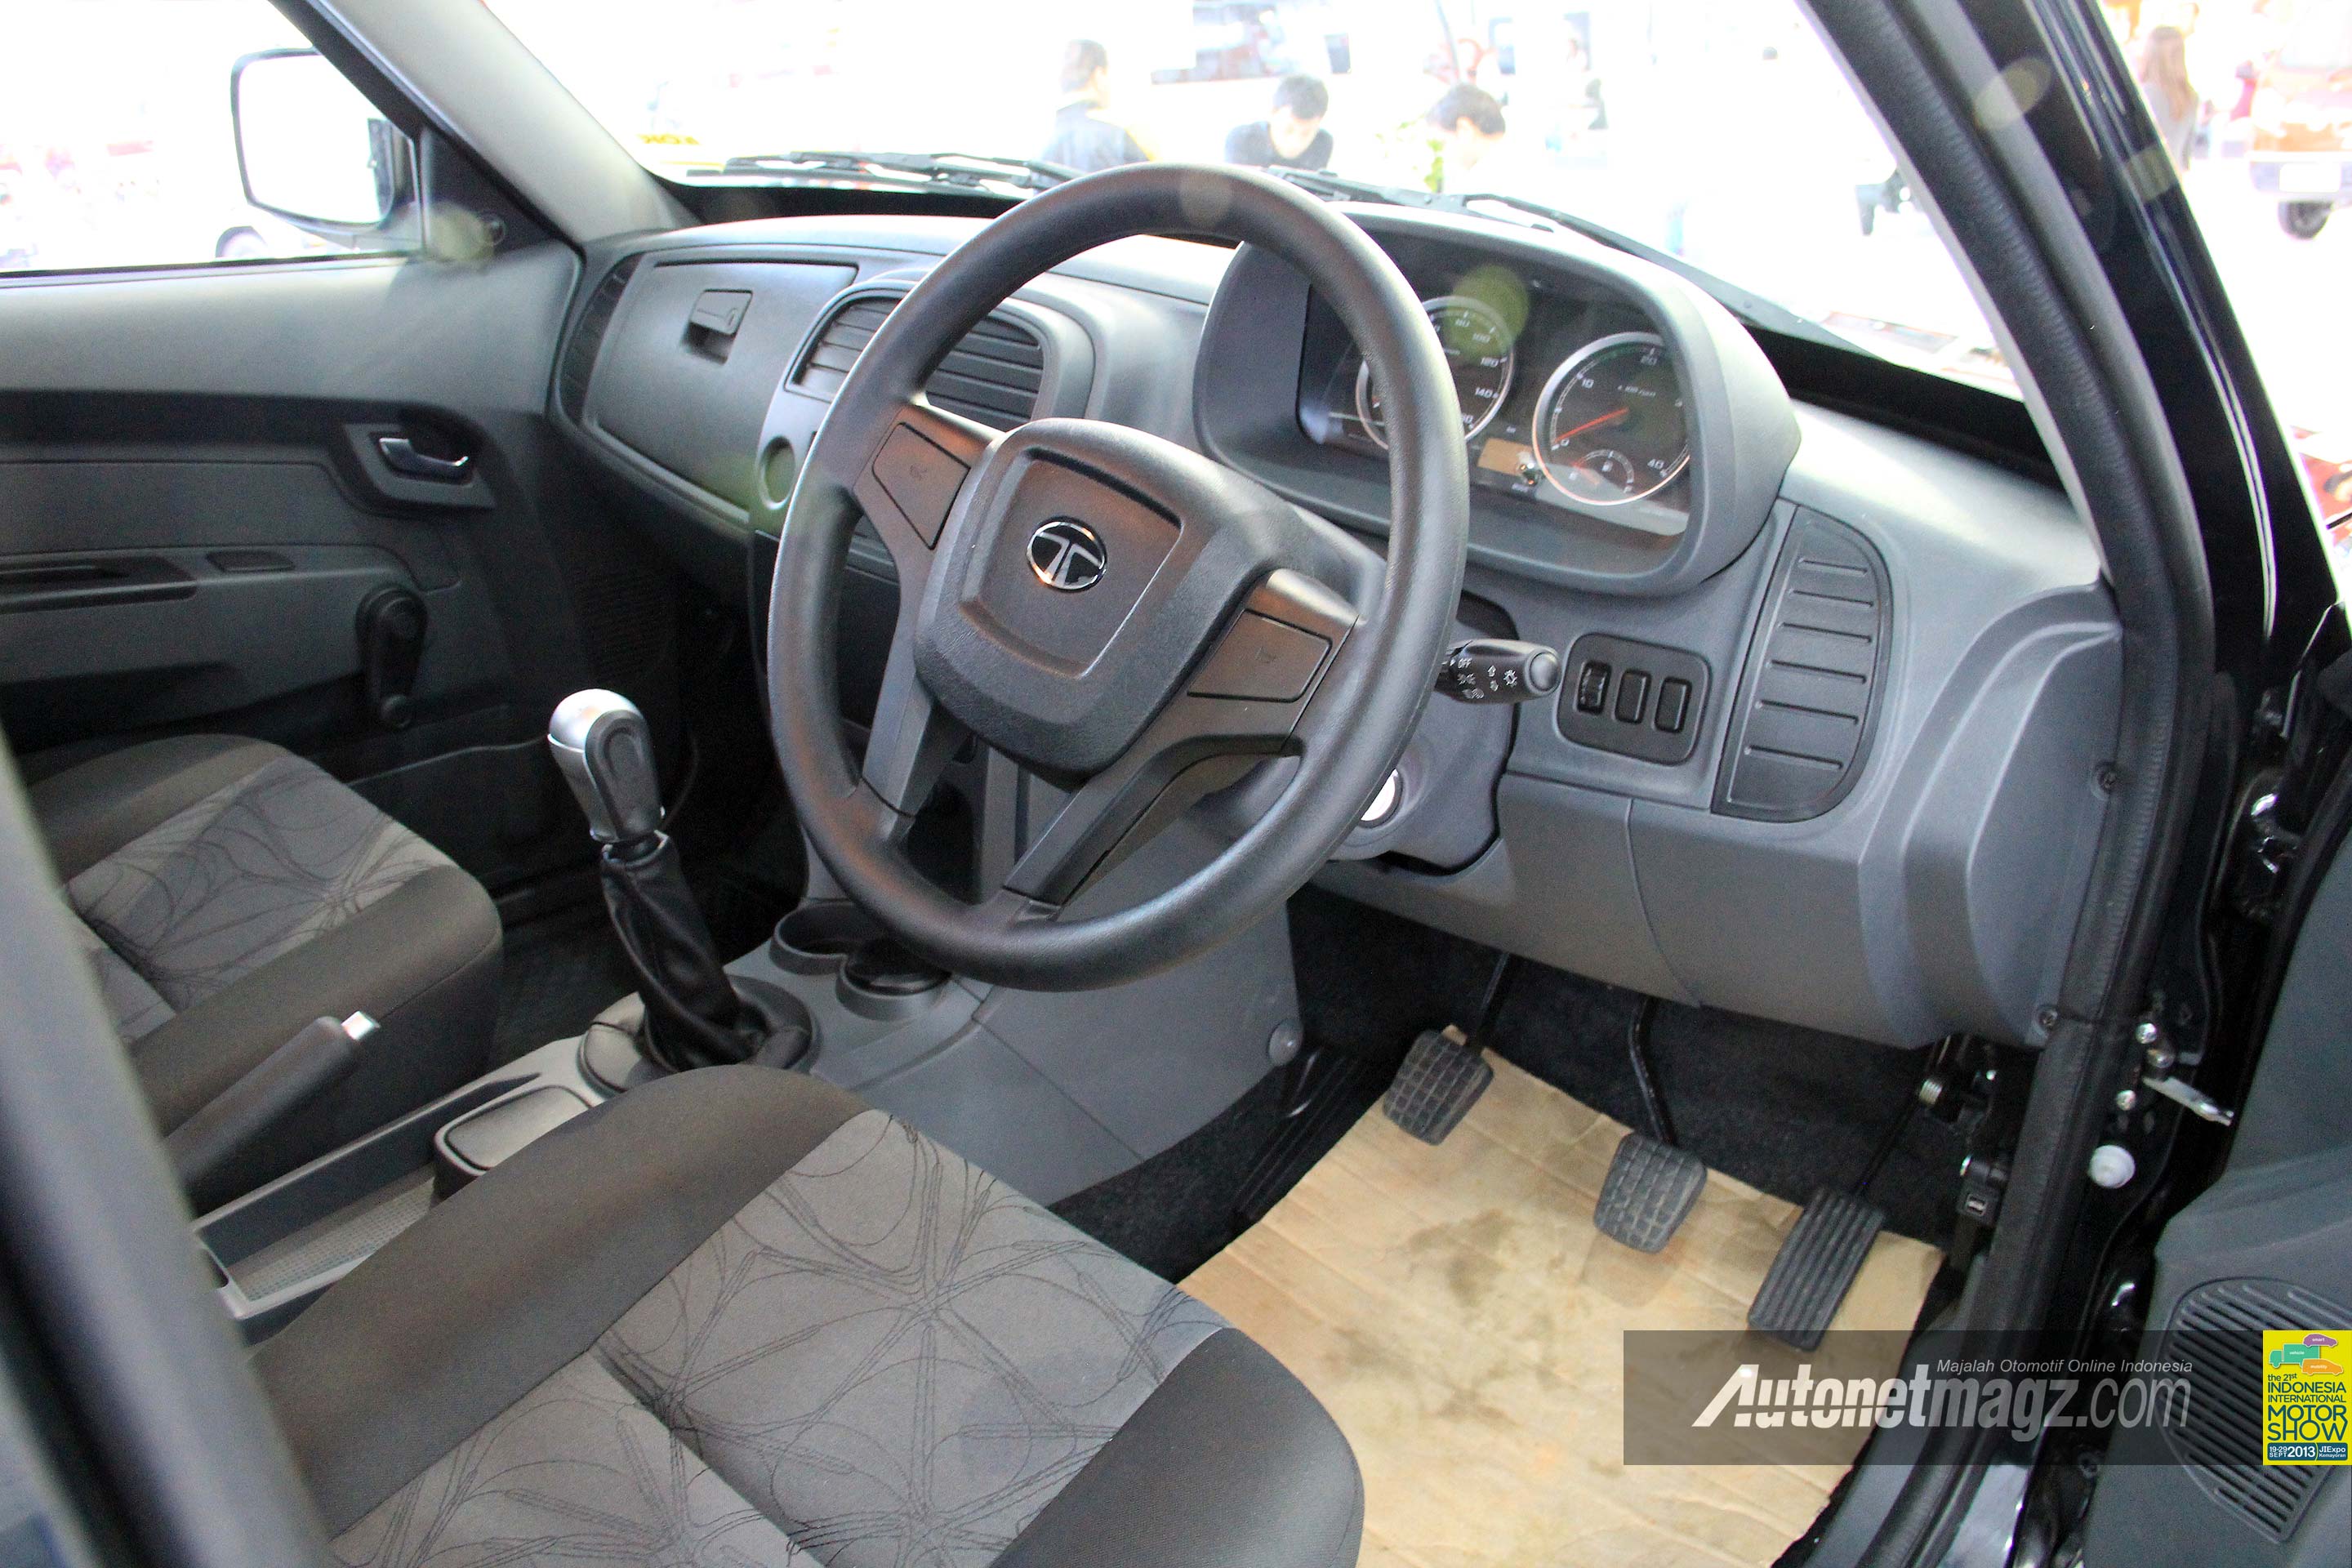  Interior  TATA Xenon RX pick up  AutonetMagz Review 